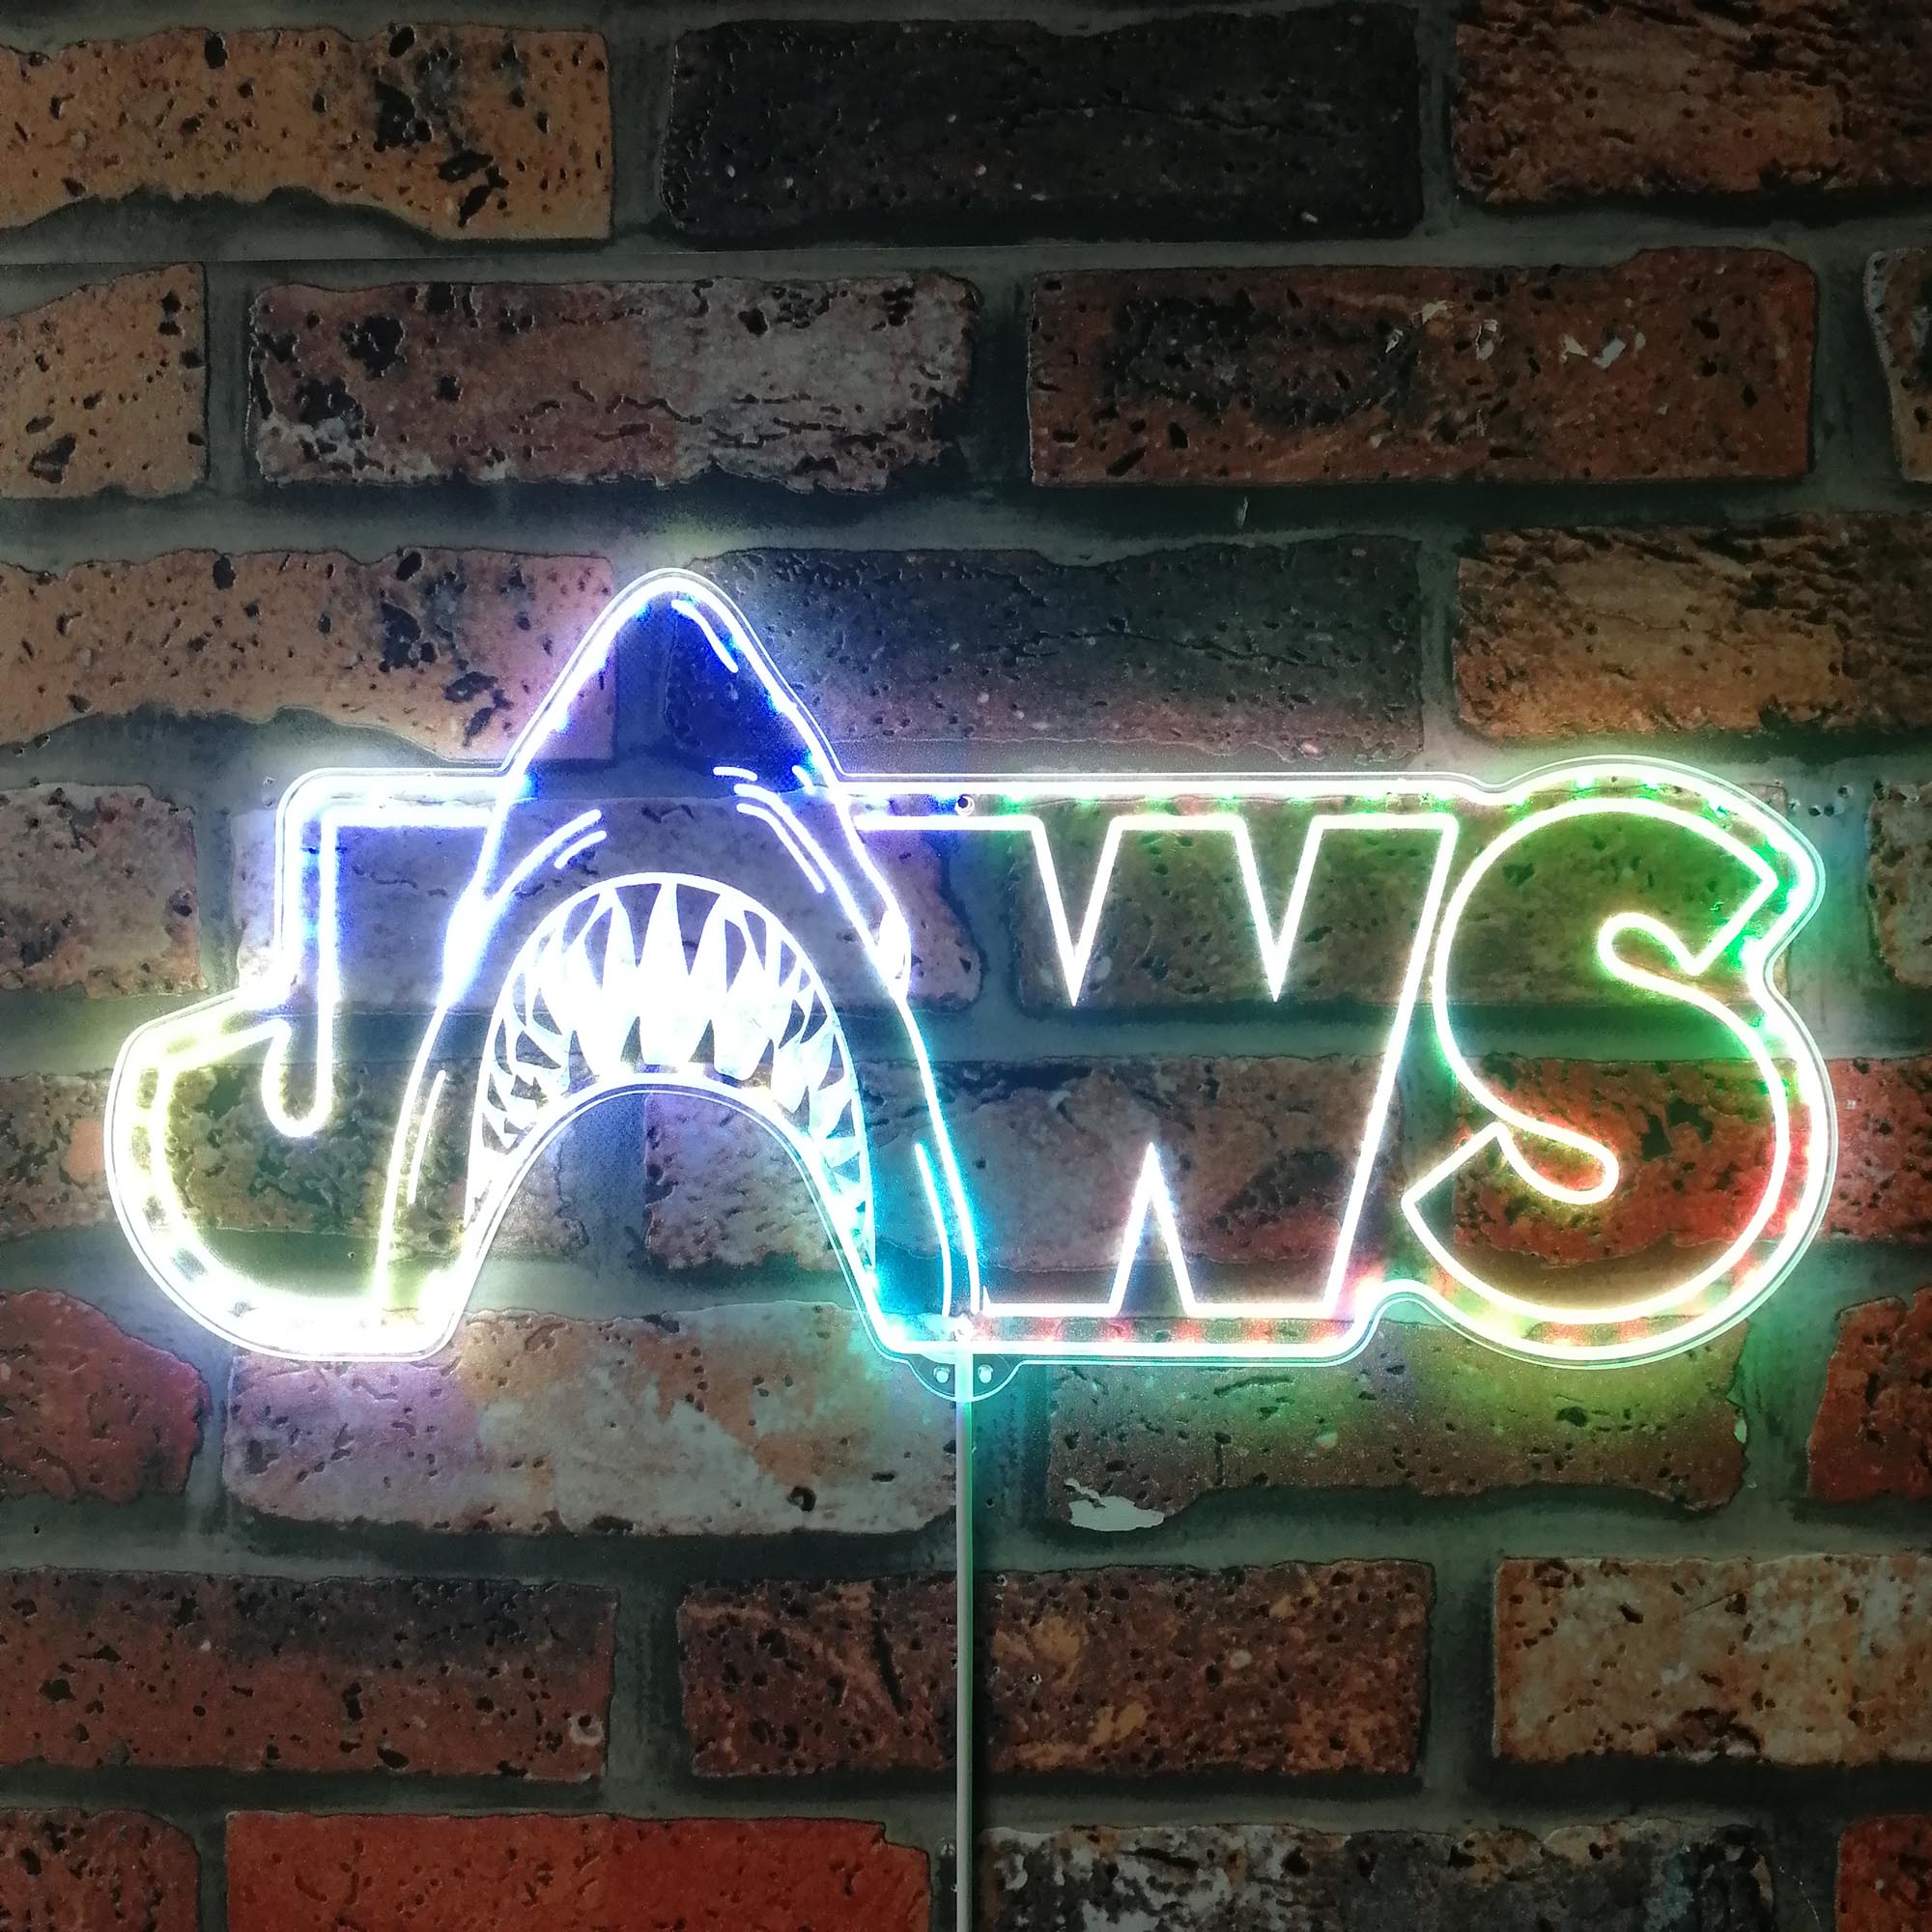 JAWS Dynamic RGB Edge Lit LED Sign